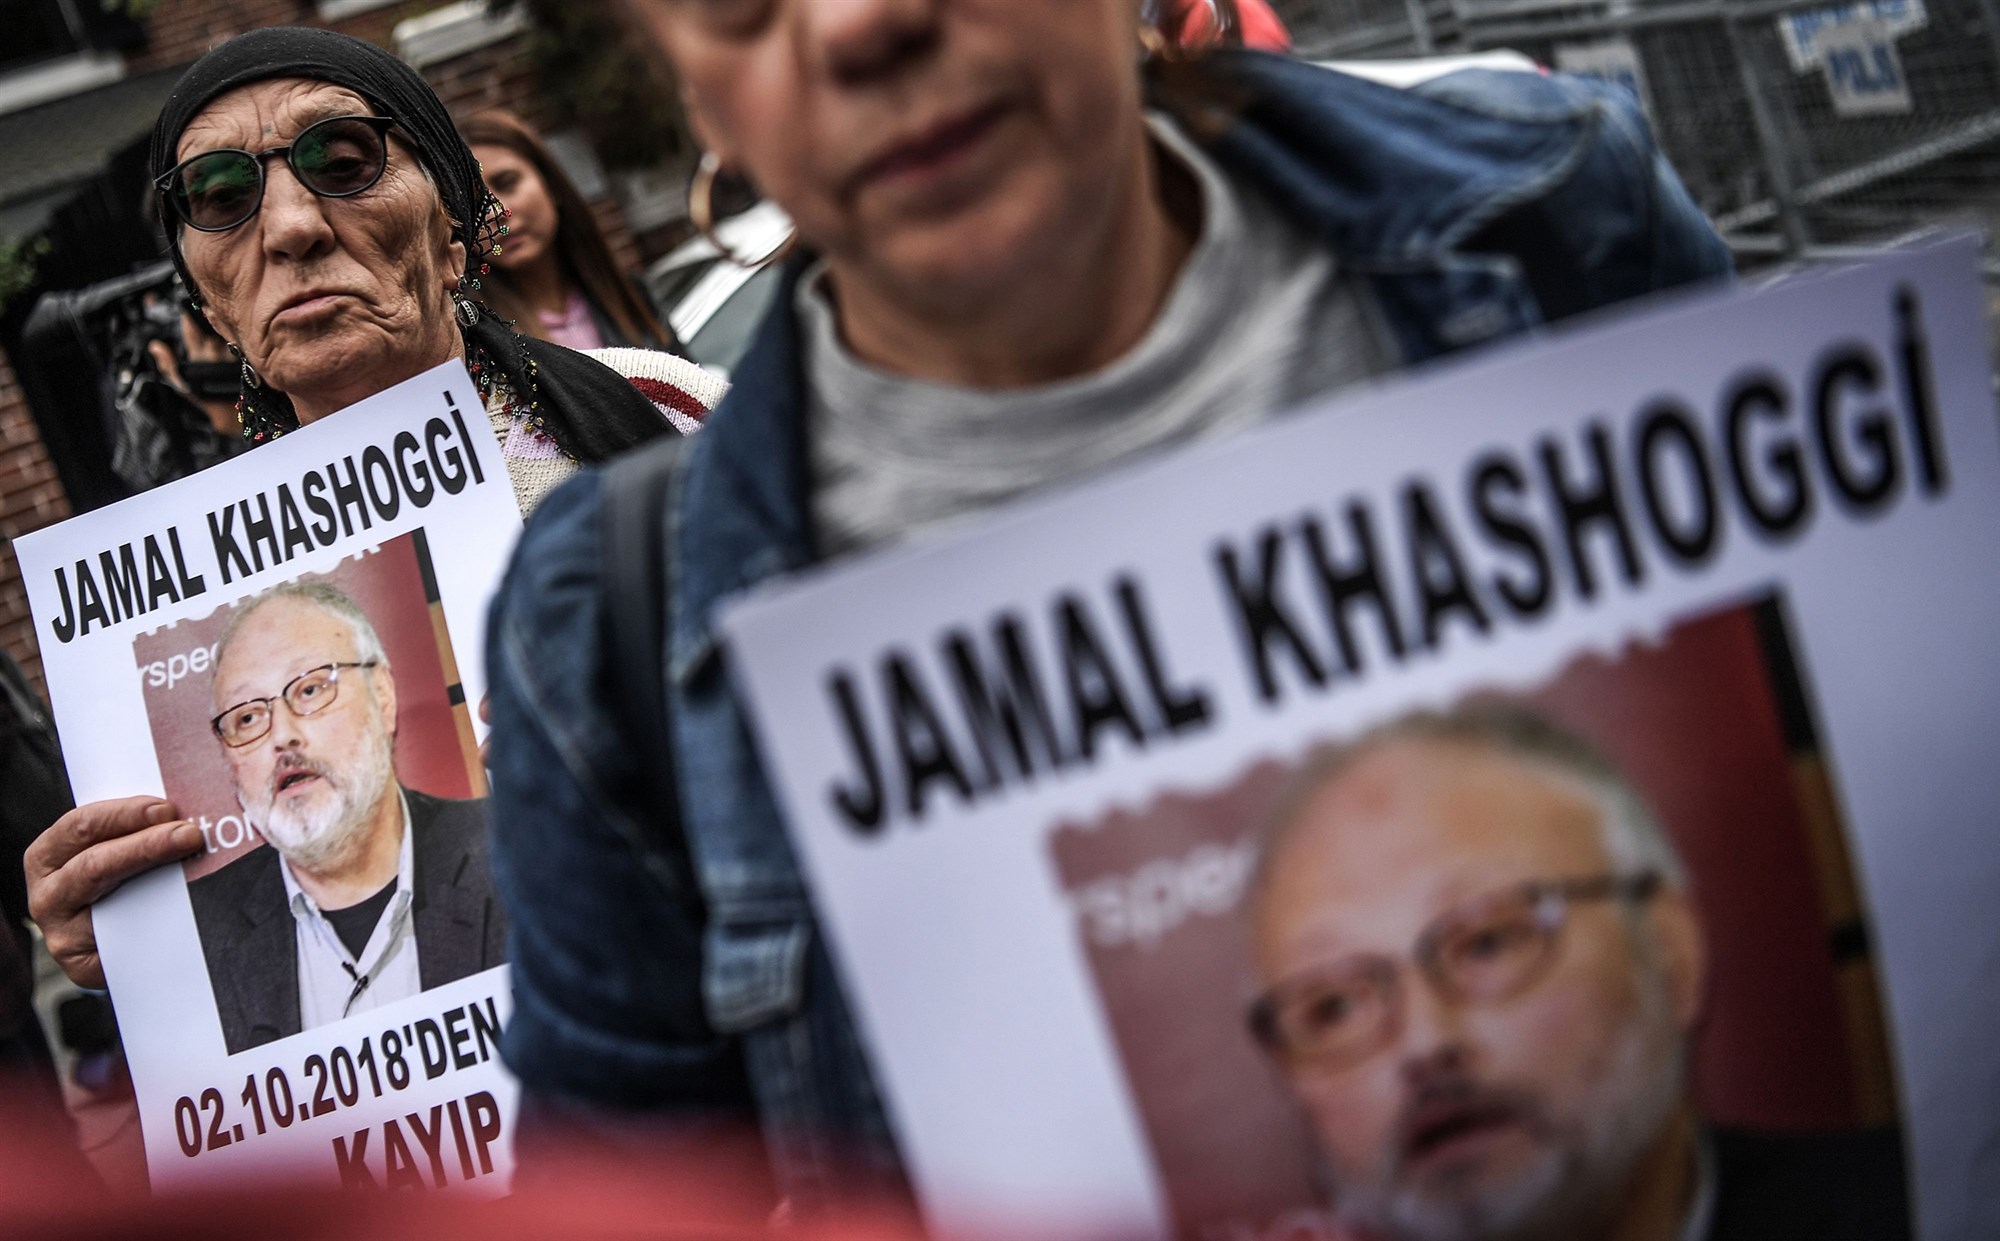 Was Khashoggi killed inside the Saudi consulate in Istanbul?